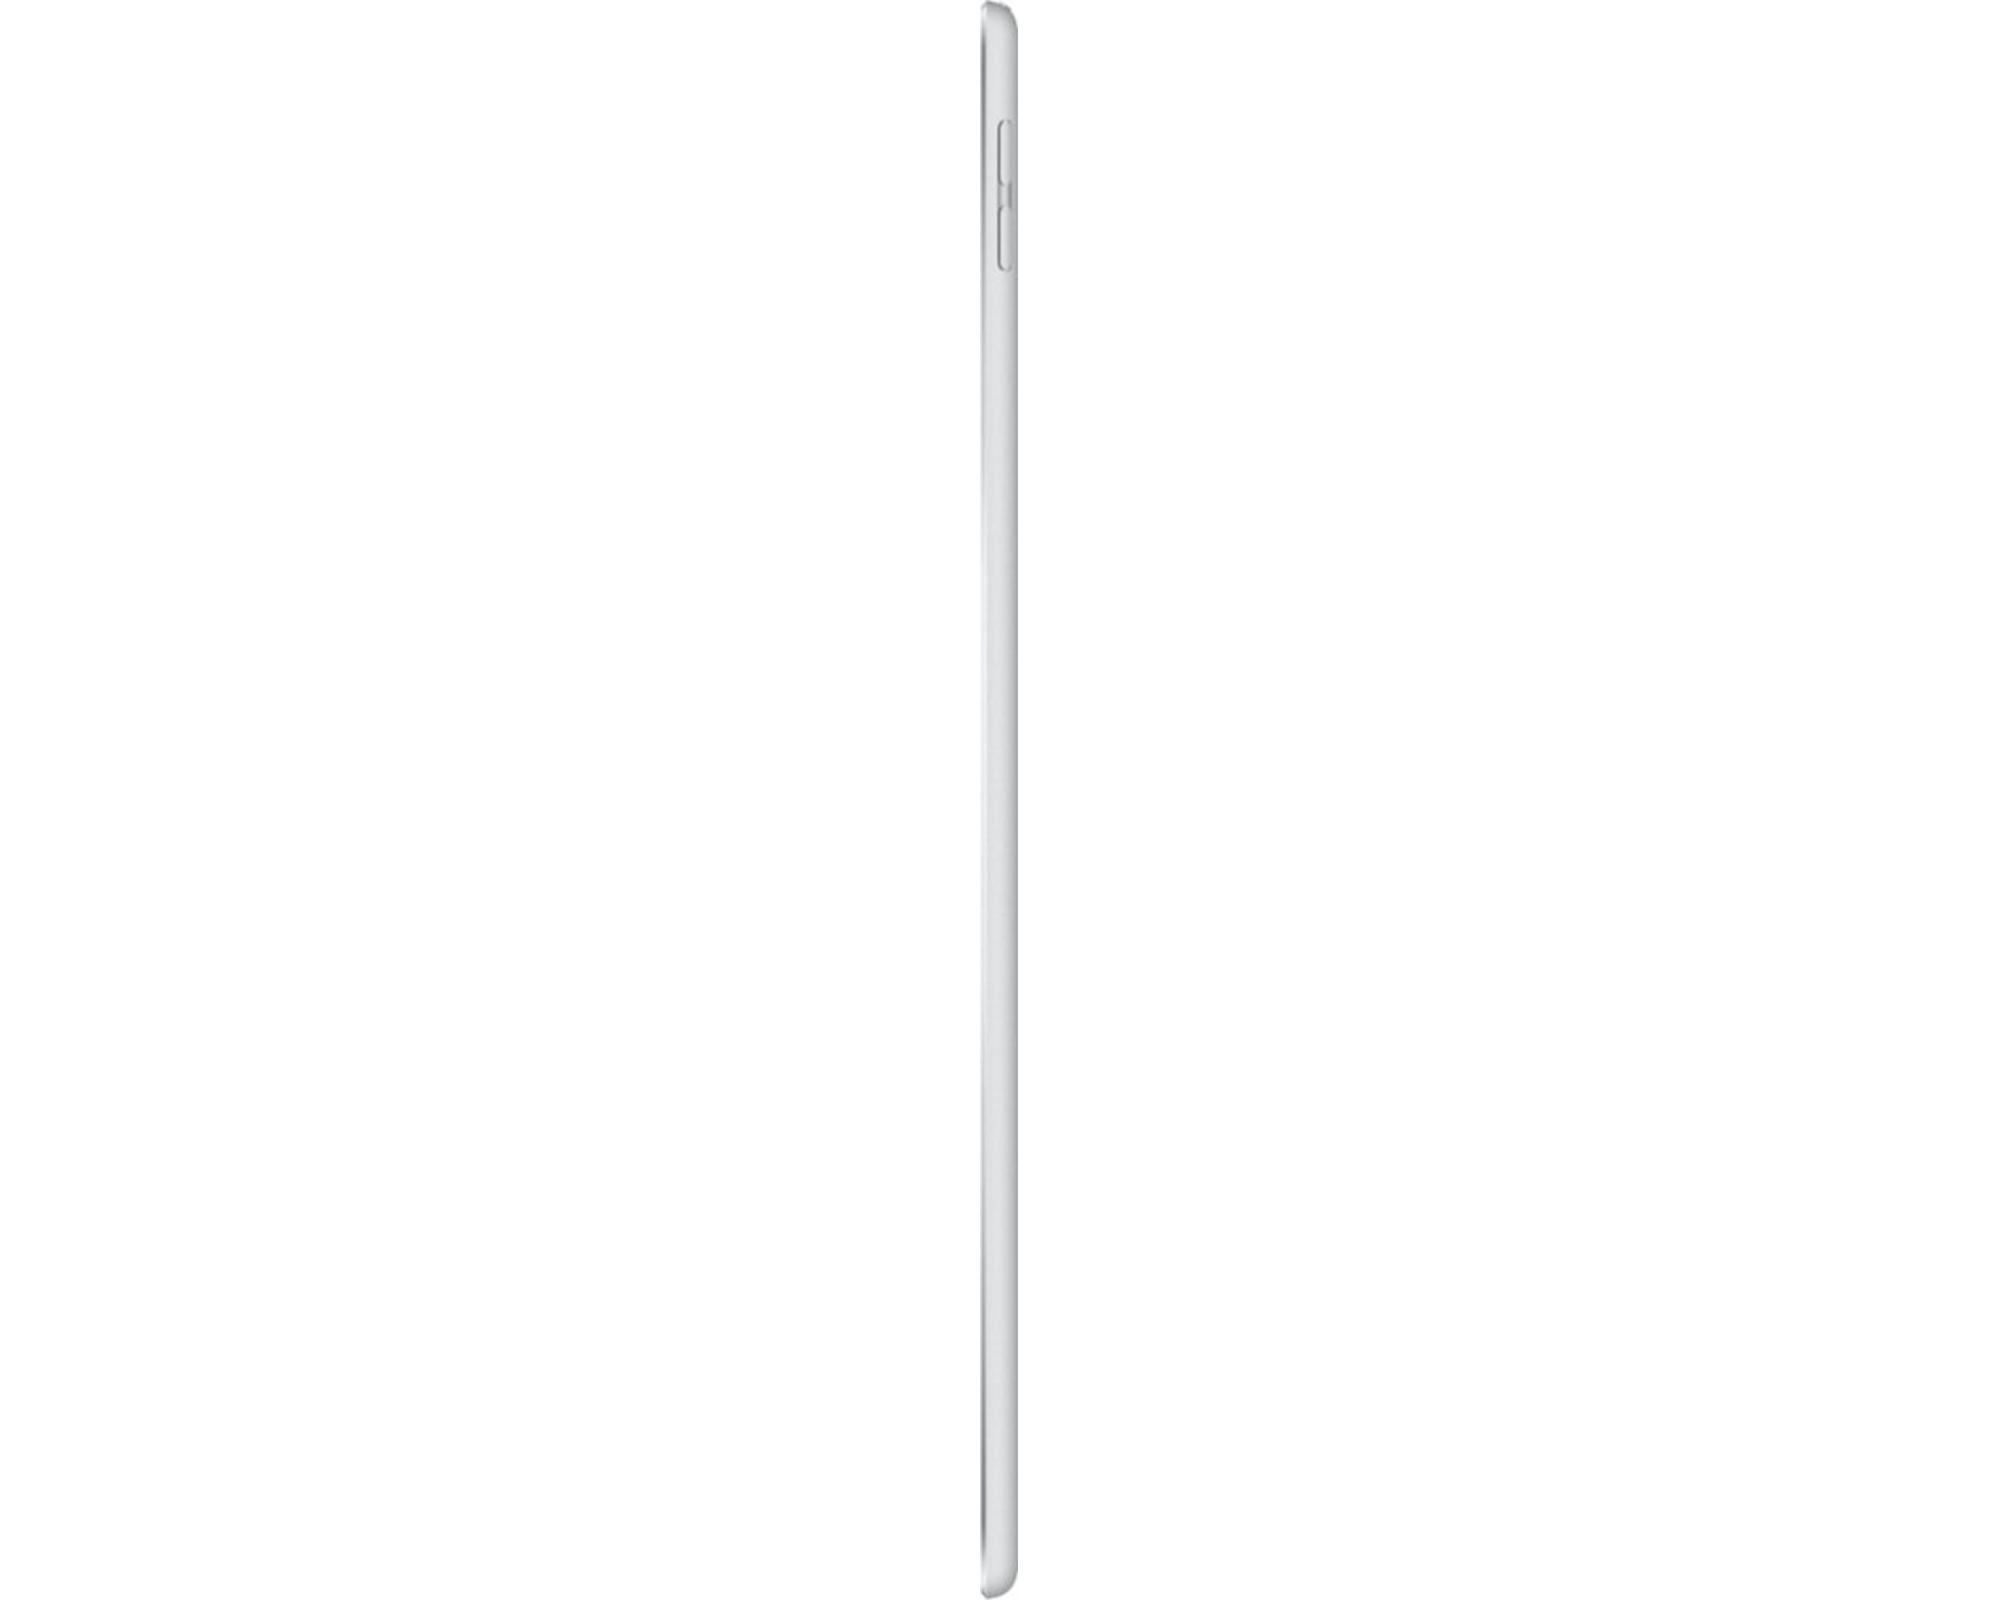 Restored Apple iPad Air 2 16GB Wi-Fi (Refurbished) - image 6 of 6